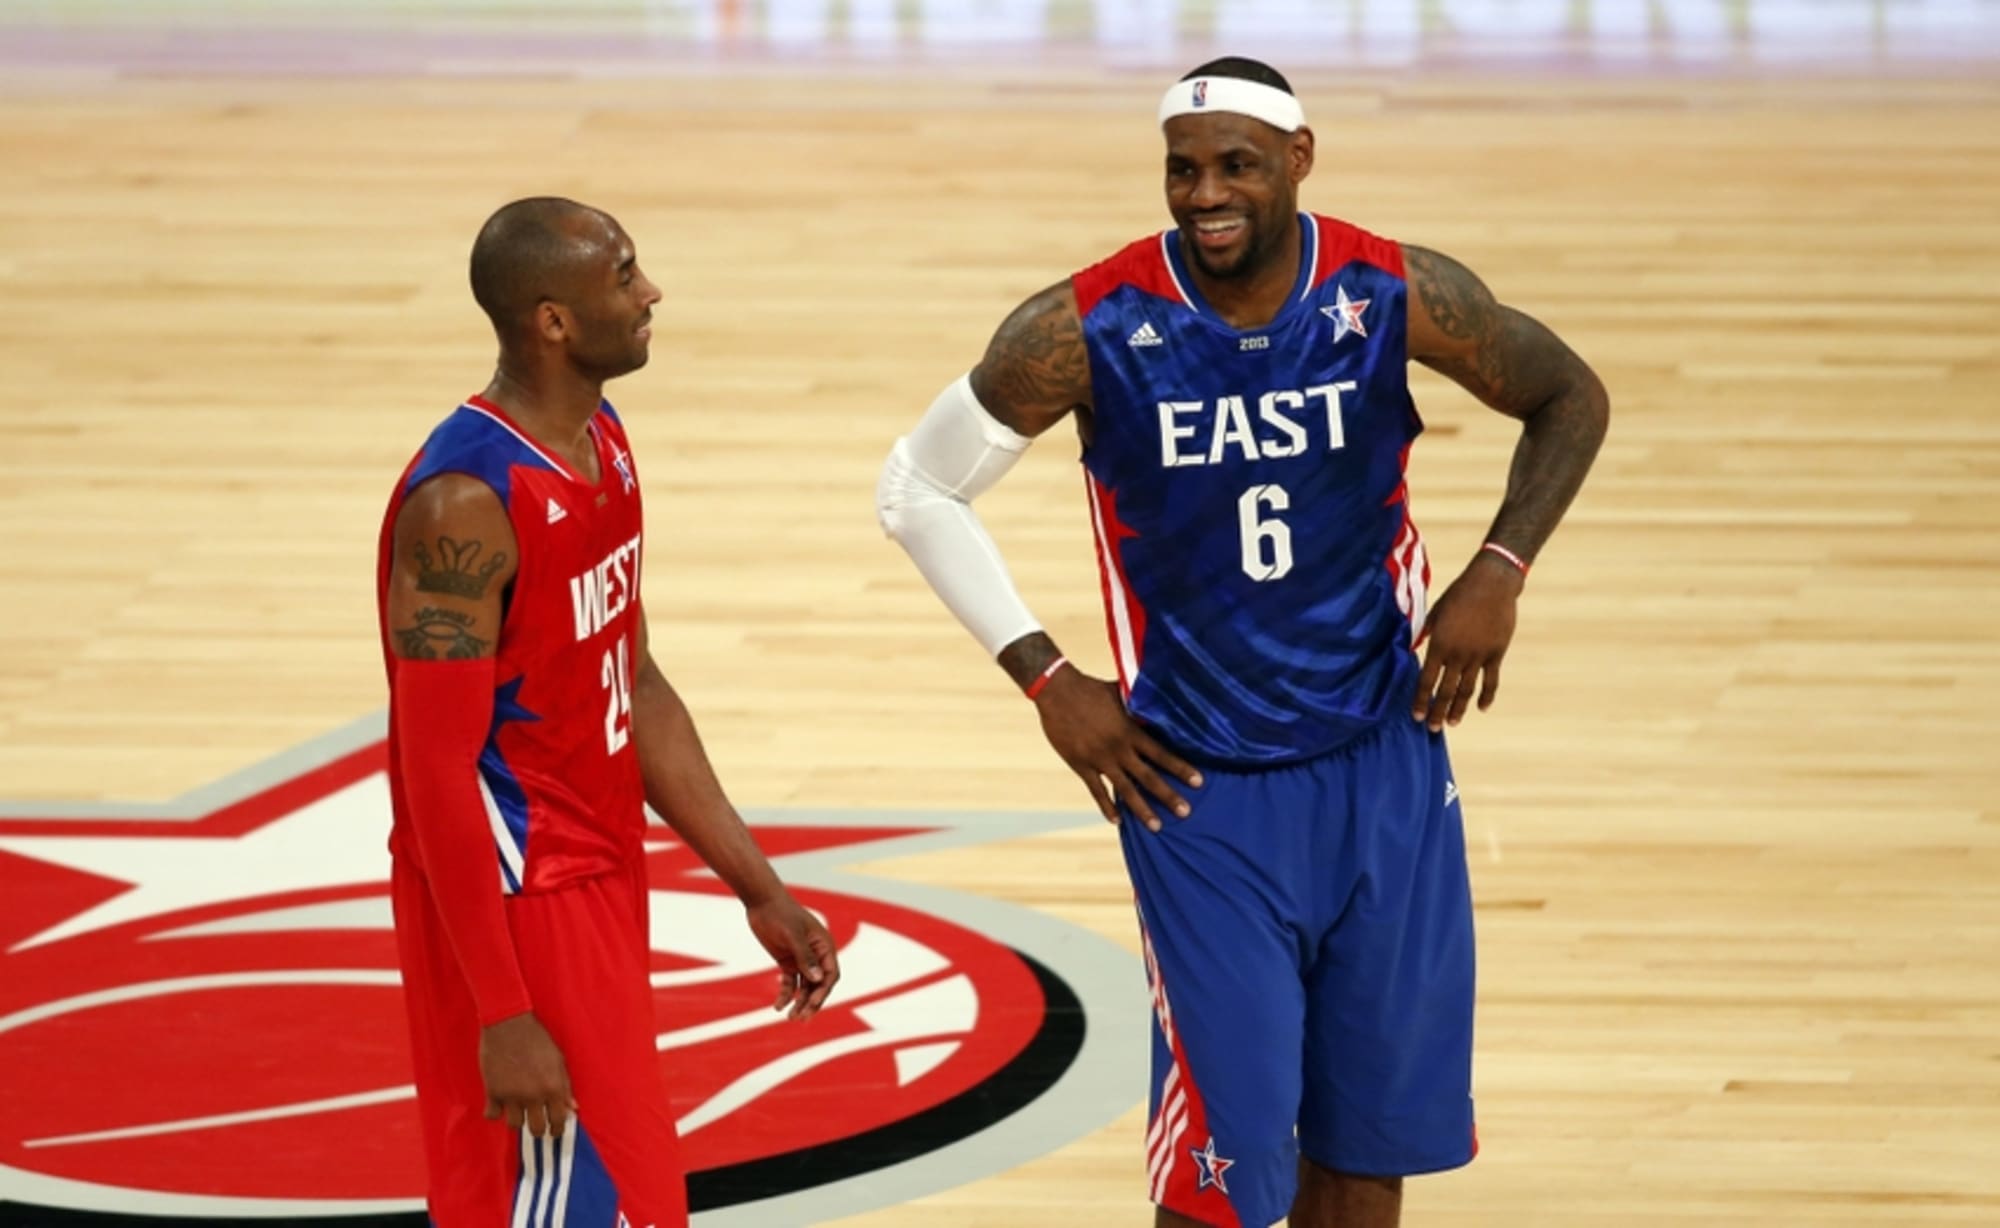 LeBron James Vs. Kobe Bryant - The First Meeting